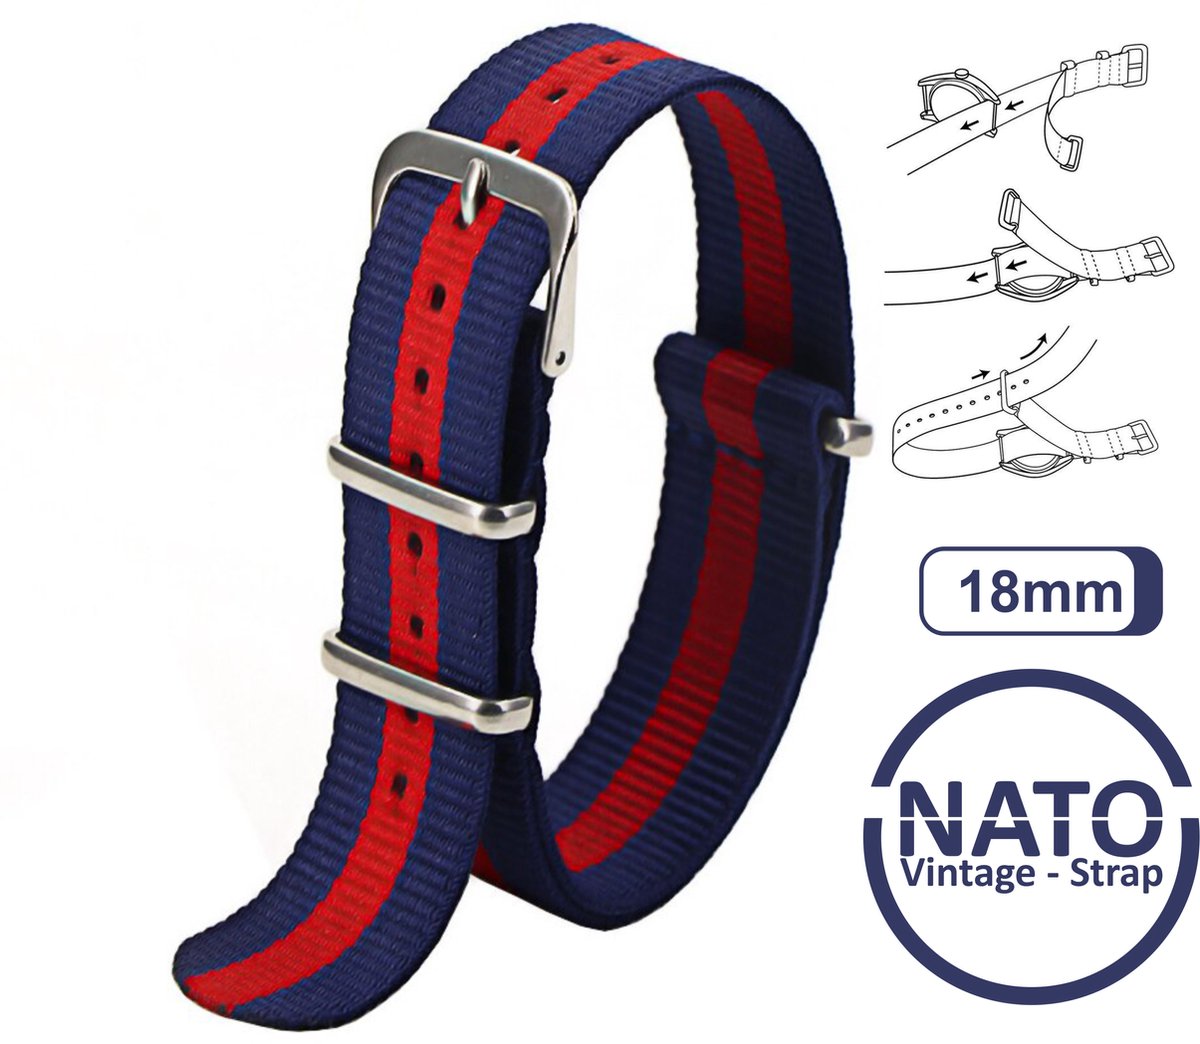 18mm Nato Strap Blauw met Rode streep - Vintage James Bond - Nato Strap collectie - Mannen - Horlogebanden - Blue Red - 18 mm bandbreedte voor oa. Seiko Rolex Omega Casio en Citizen